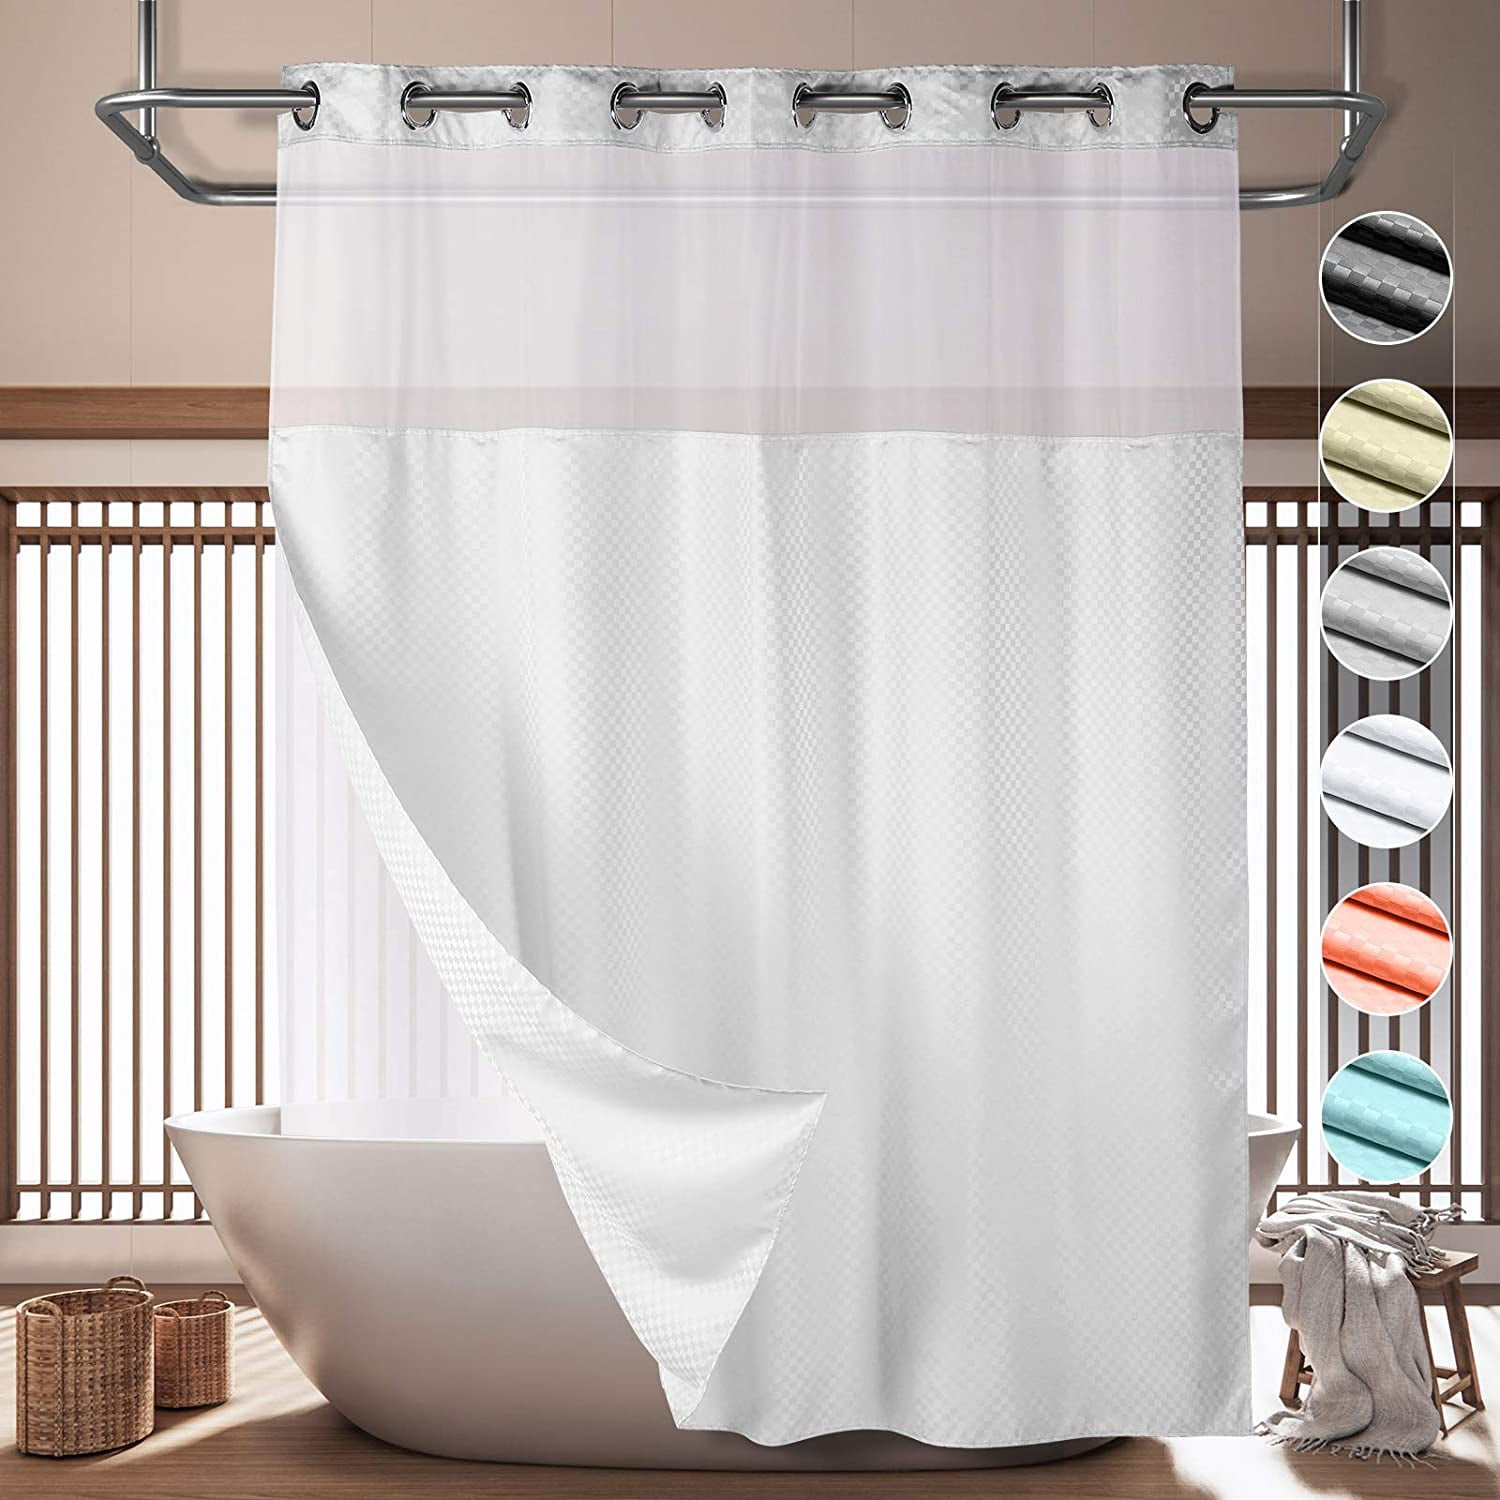 Lagute SnapHook Shower Curtain w/Snap-in LinerBathroom Curtain Hookless 